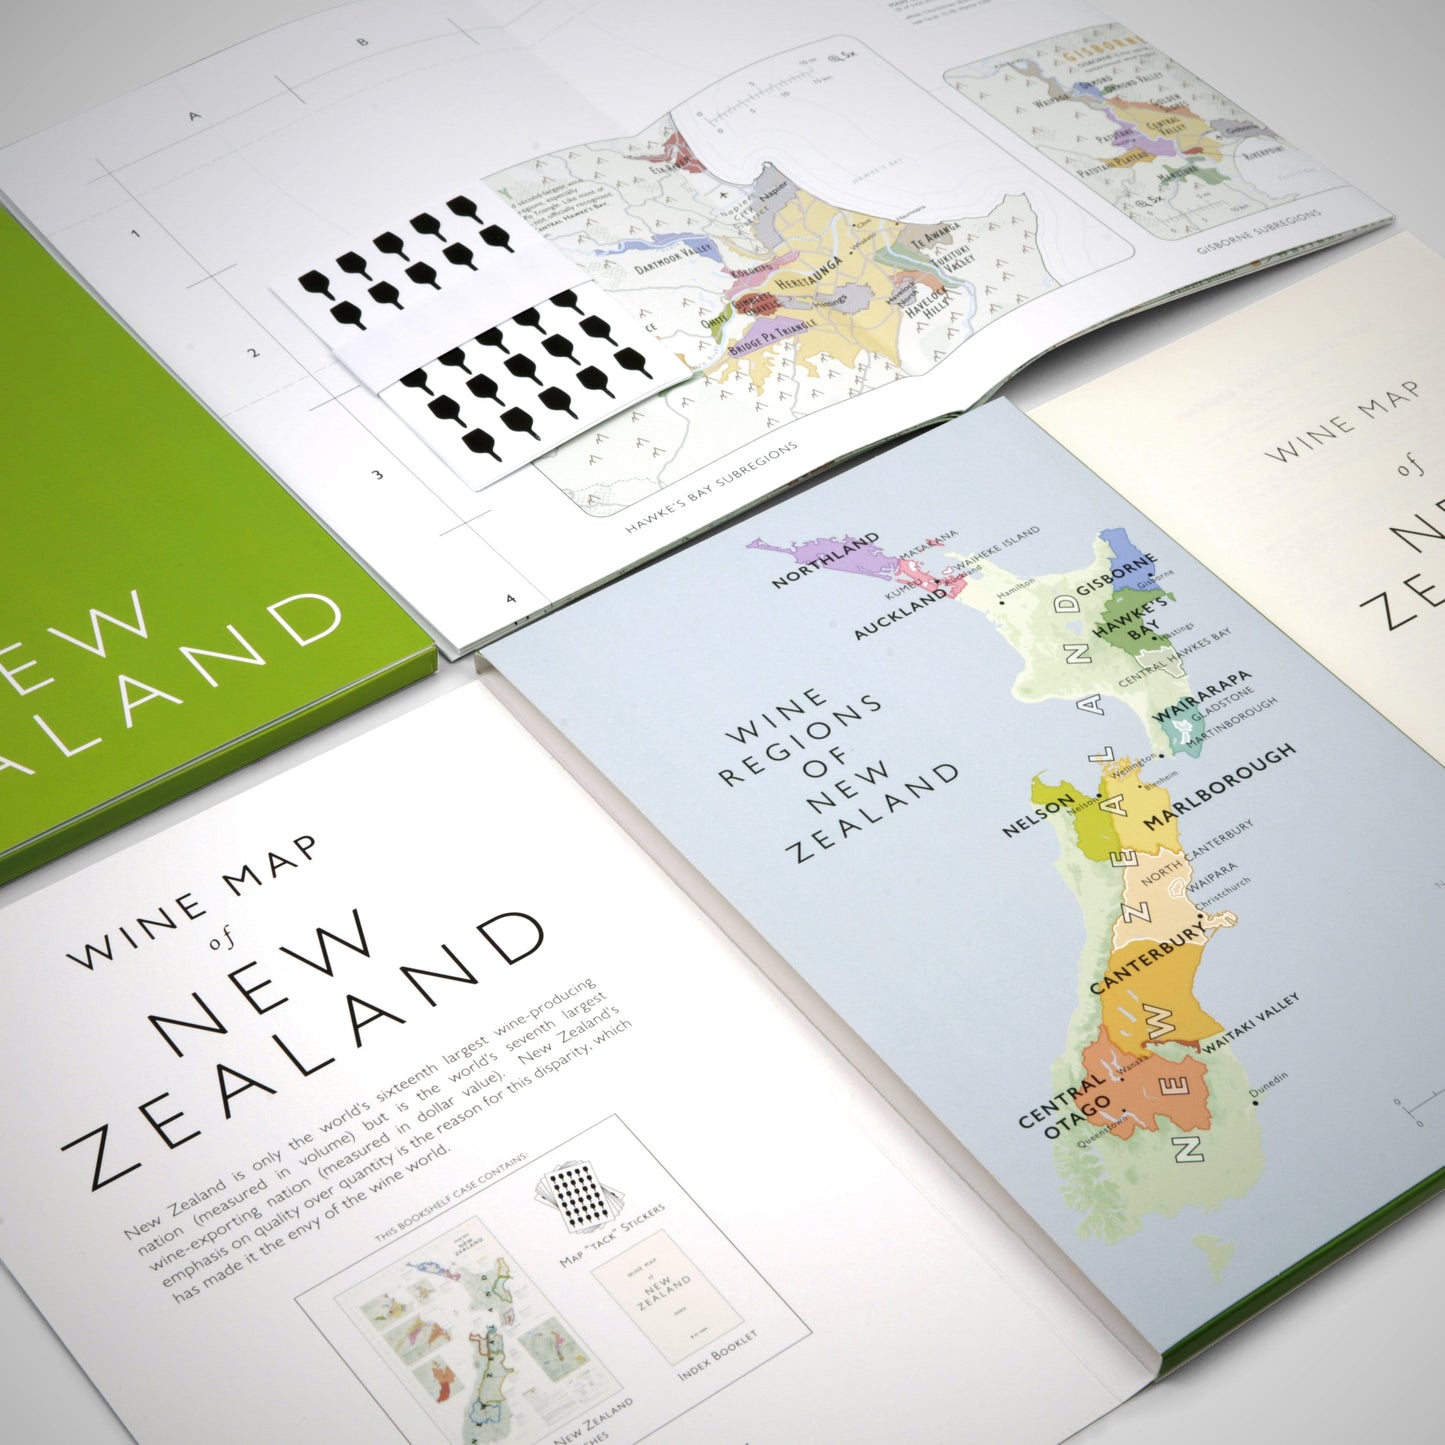 Wine Map of New Zealand Bookshelf Edition Open